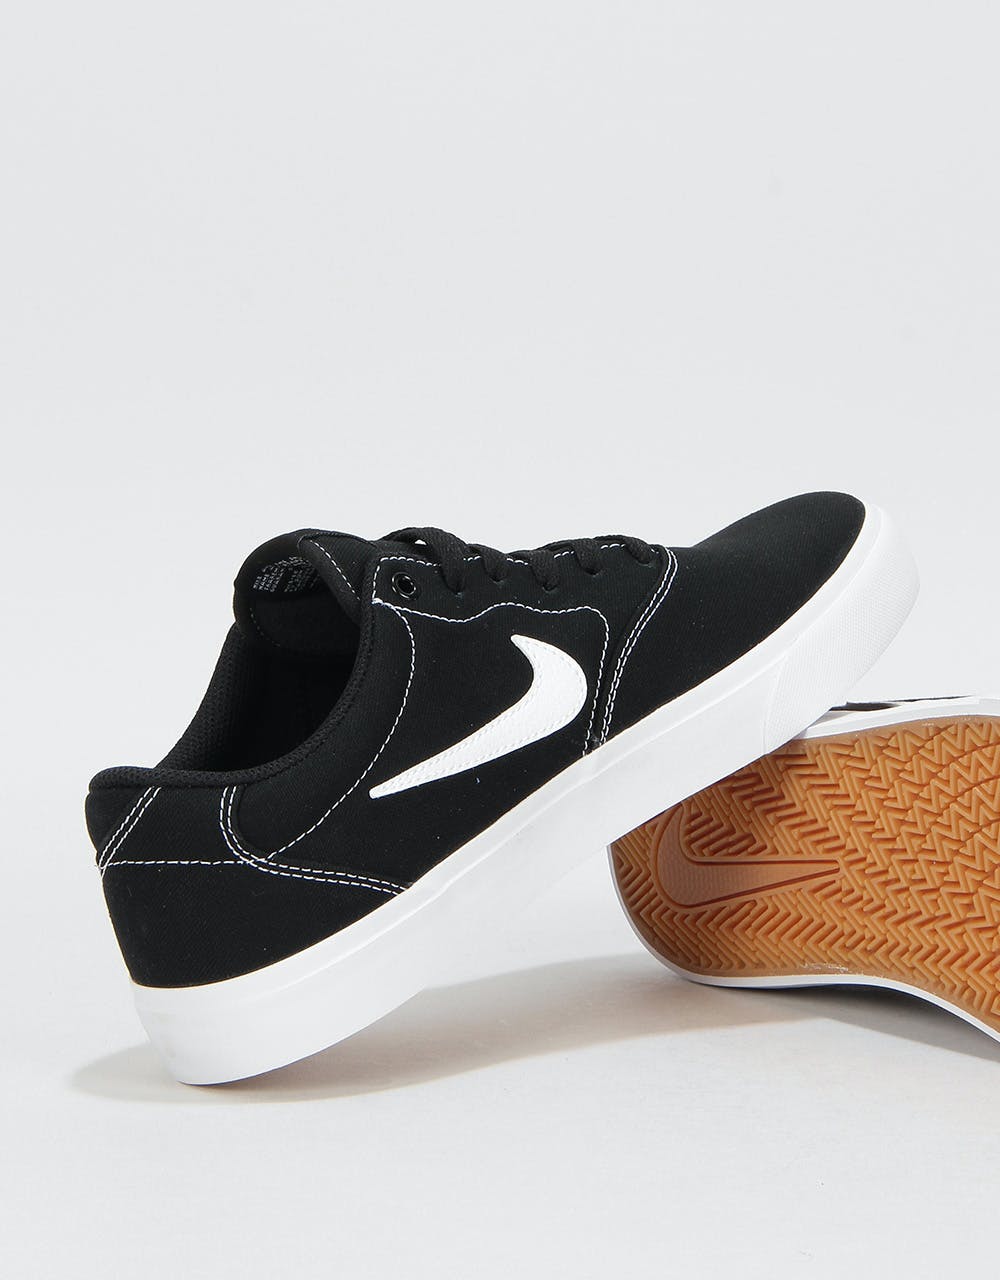 Nike SB Charge Solarsoft Canvas Skate Shoes - Black/White-Black-Gum